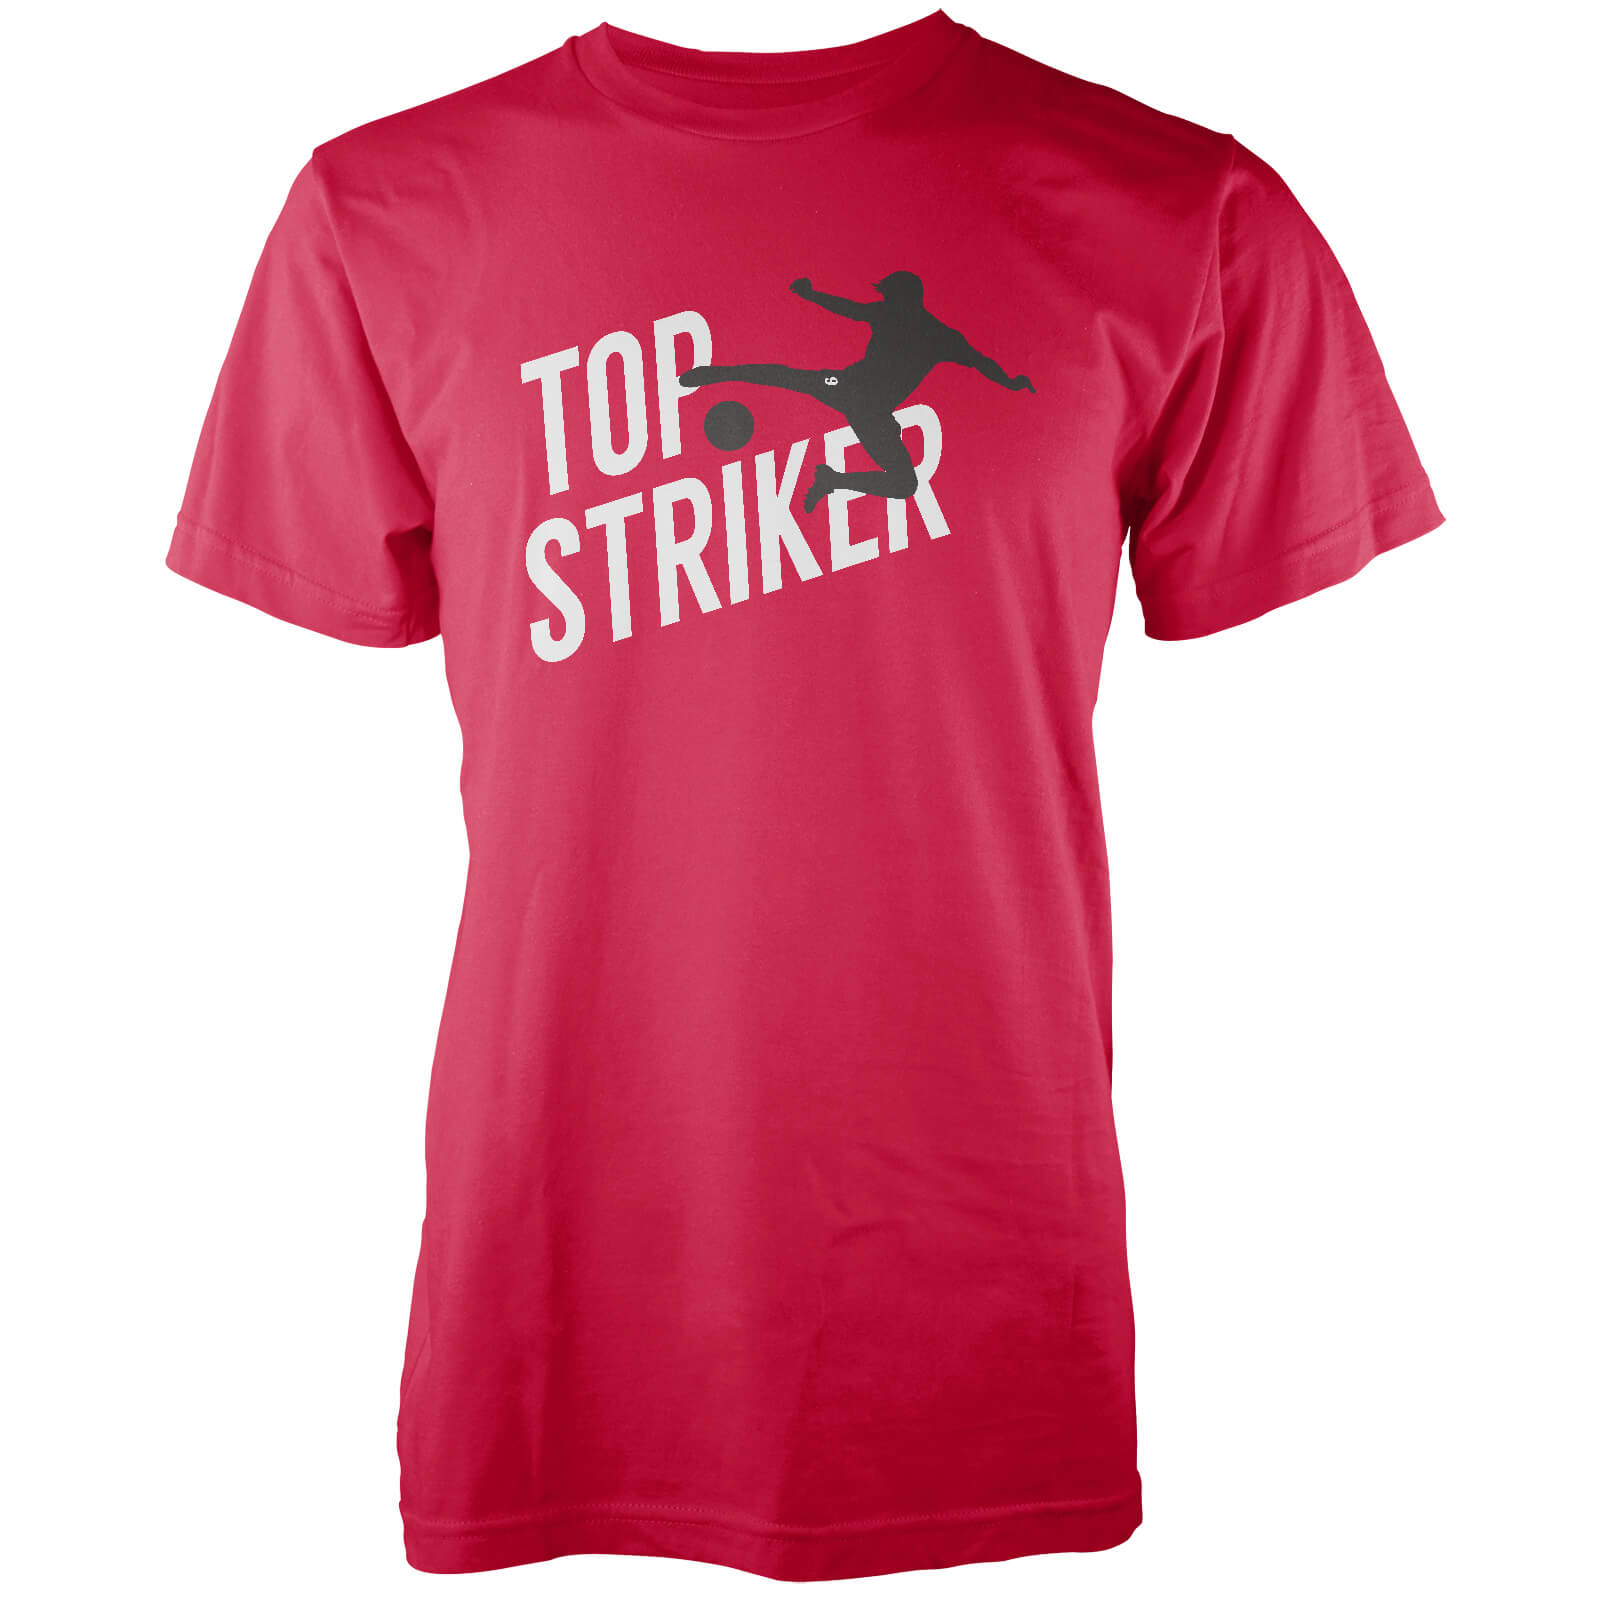 Top Striker Men's Red T-Shirt - S - Red